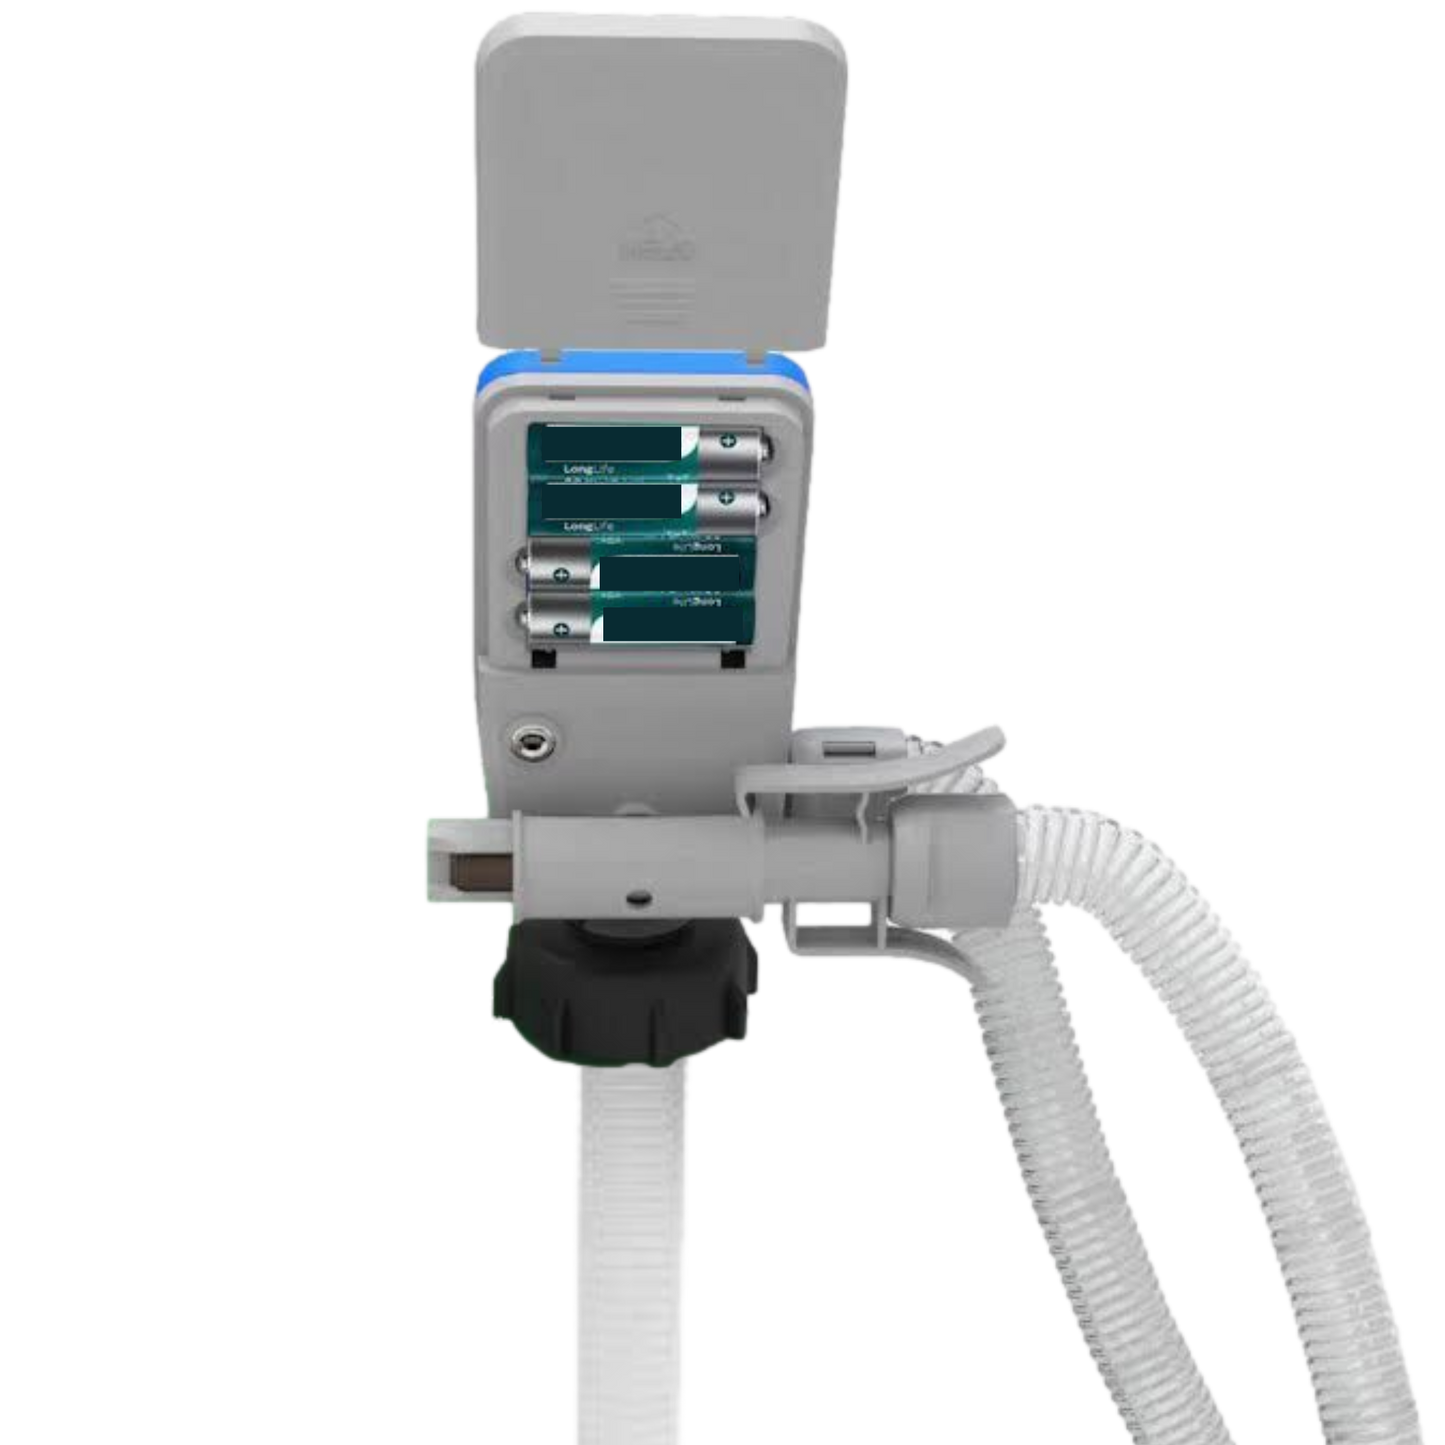 *NEW* PROTOTYPE Fuel Pump + Jerry Can Kit - Fuel Transfer Siphon Pump for Gas, Diesel, Kerosene, 3 Power Sources w/ Extra Long Hose - BRS Super Pumps